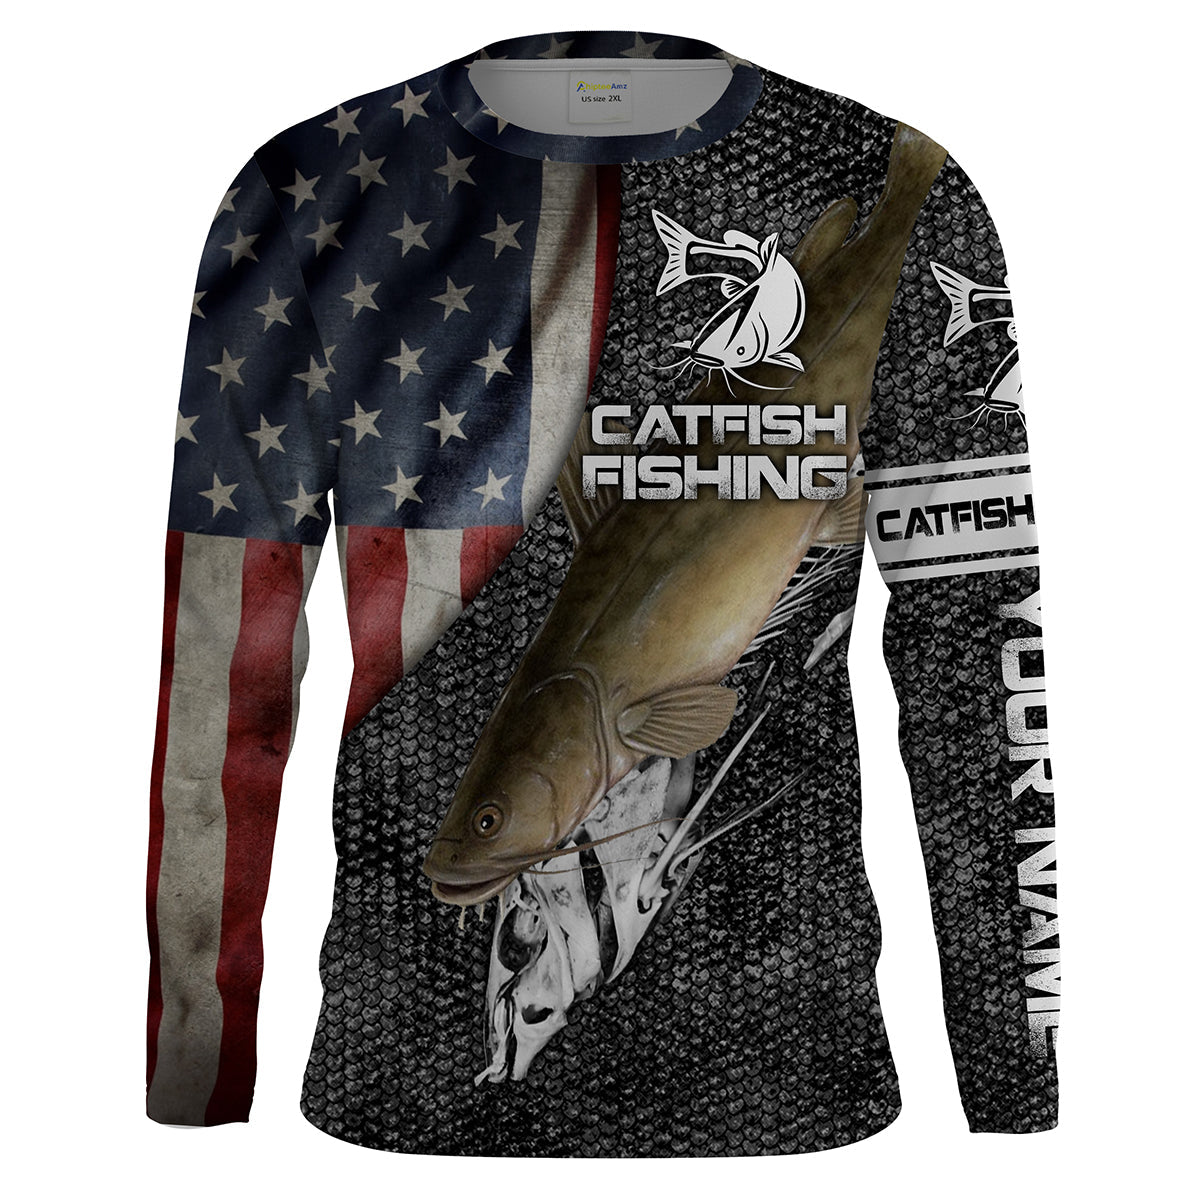 Flathead catfish fishing american flag patriotic fishing shirts for men Performance UV protection quick dry Customize name Cornbee